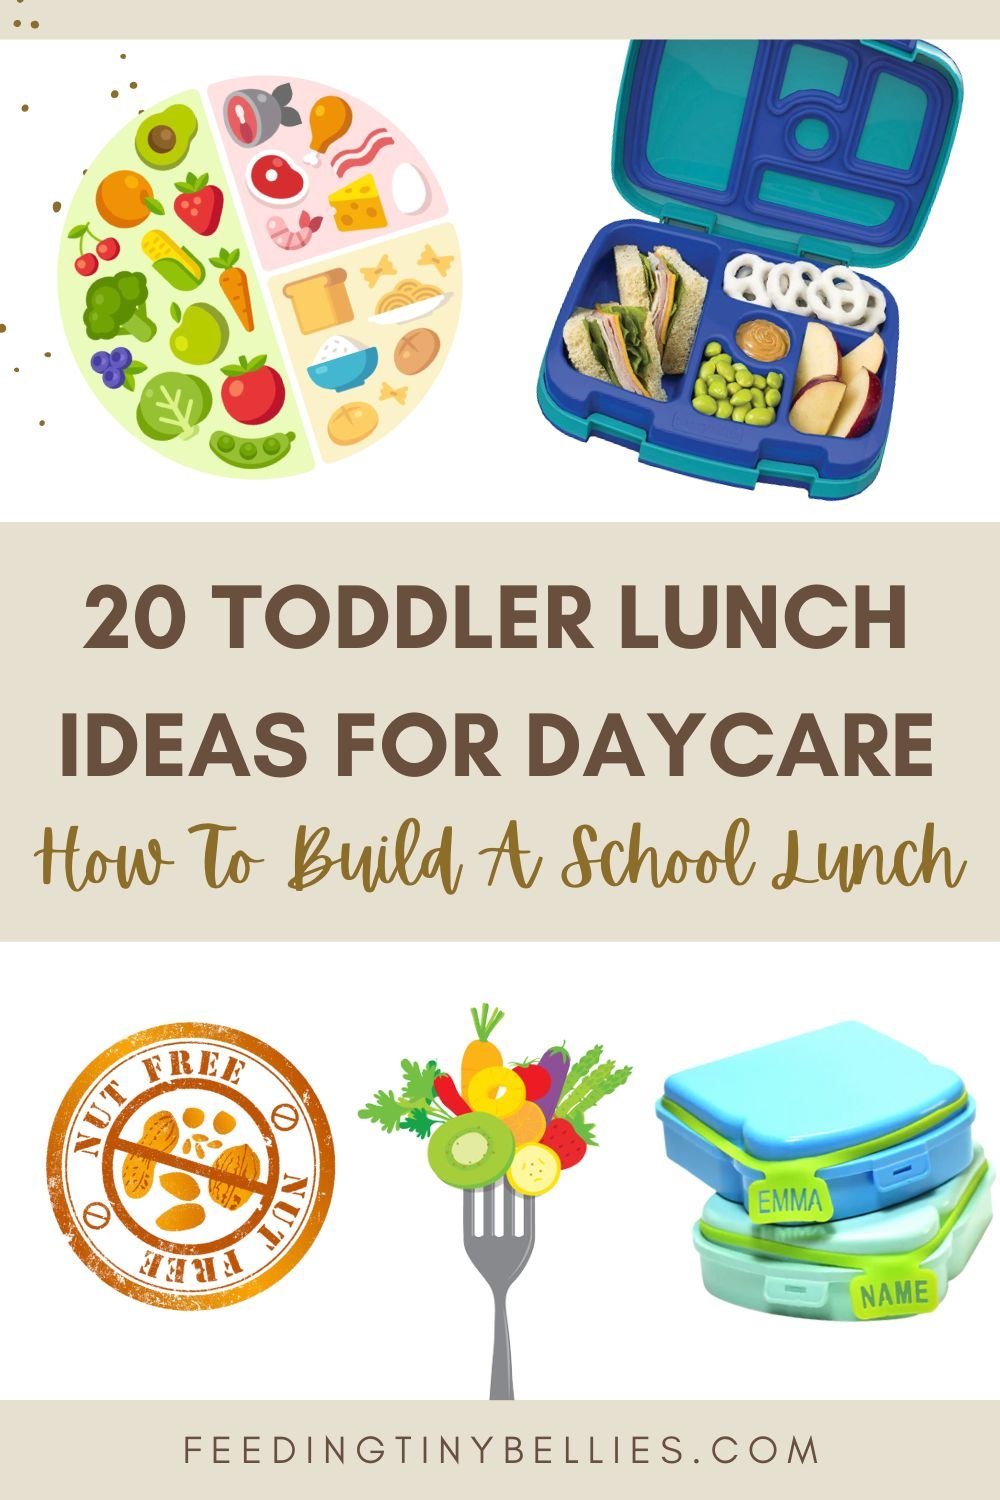 https://feedingtinybellies.com/wp-content/uploads/2022/08/20-Toddler-Lunch-Ideas-For-Daycare-1-1.jpg